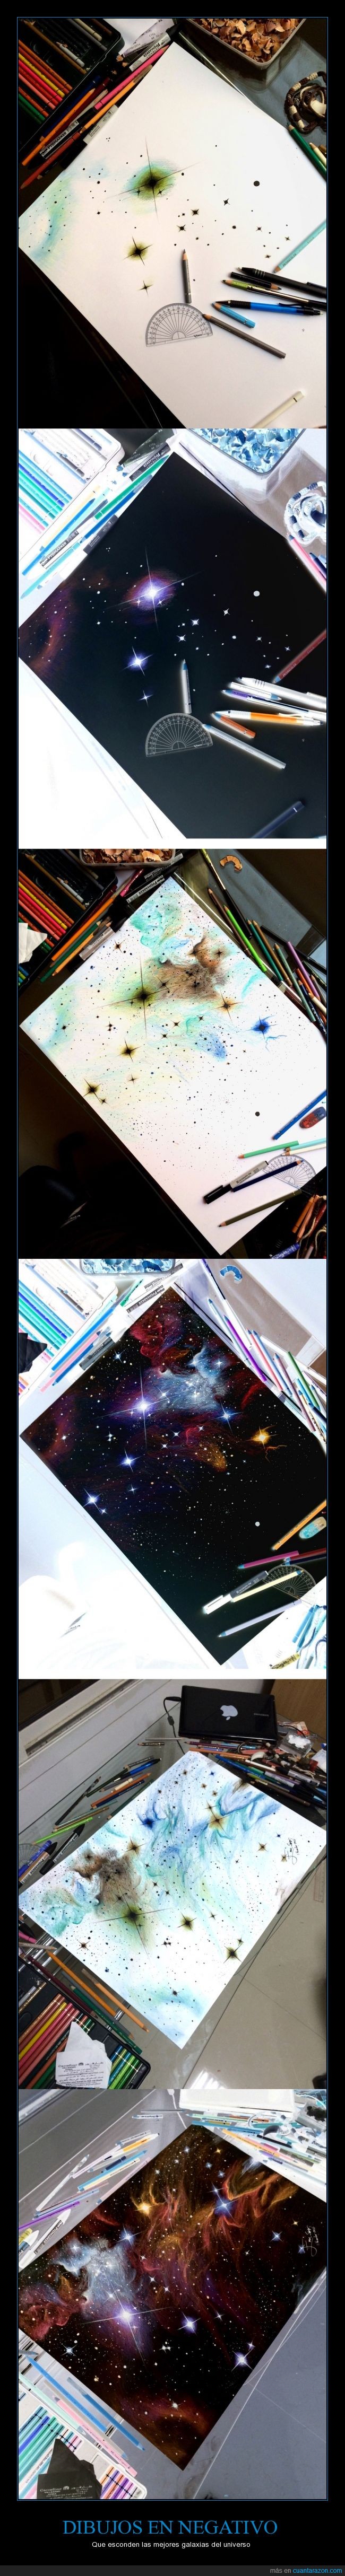 dibujo,negativo,invertir,galaxia,cielo,universo,espacio,ilustracion,arte